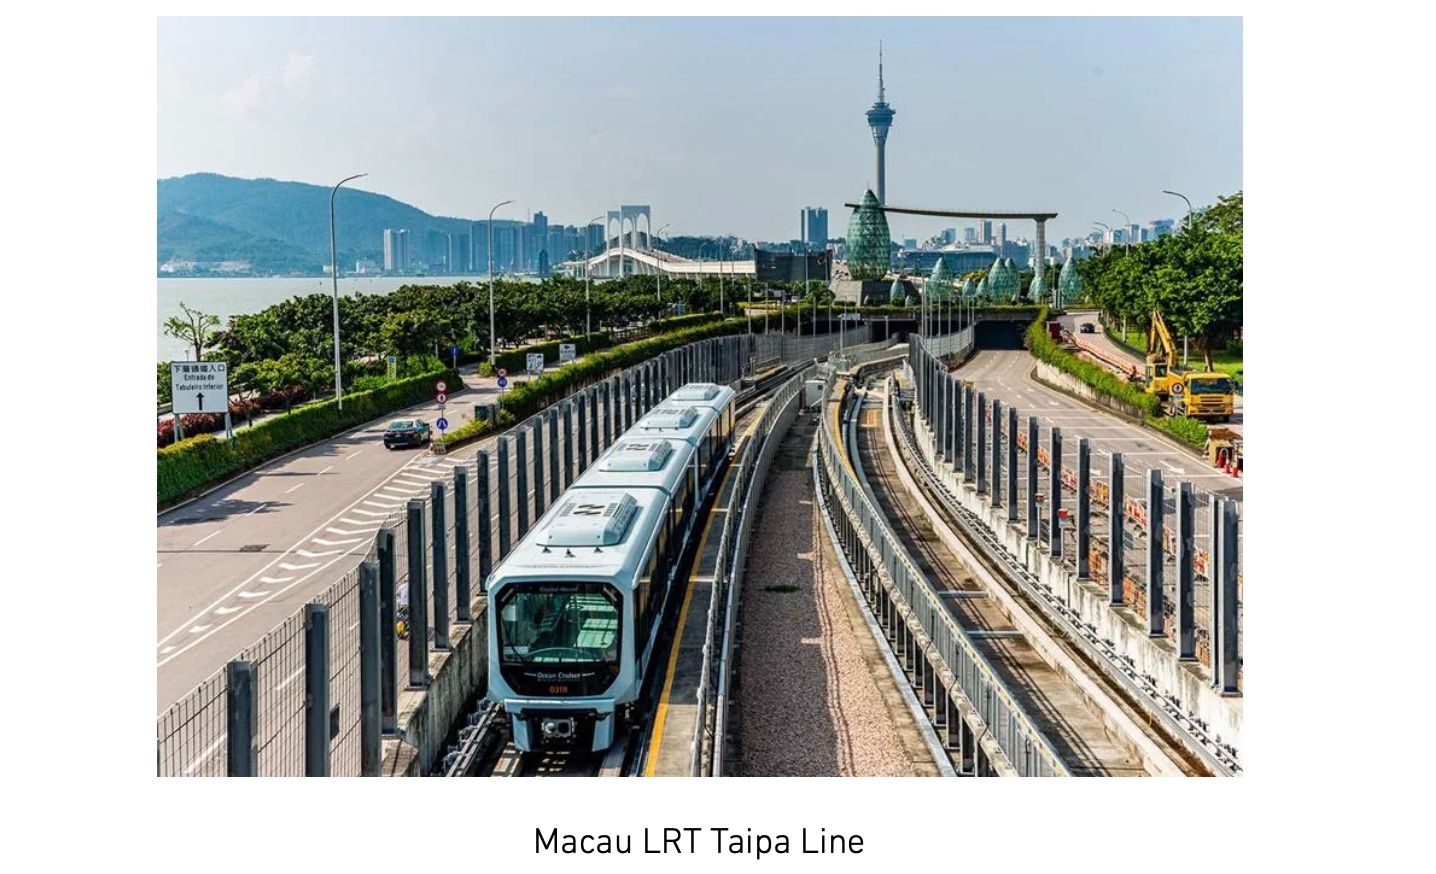 Macau LRT Barra Extension Line Begins Commercial Operations on December 8 PlatoBlockchain Data Intelligence. Vertical Search. Ai.